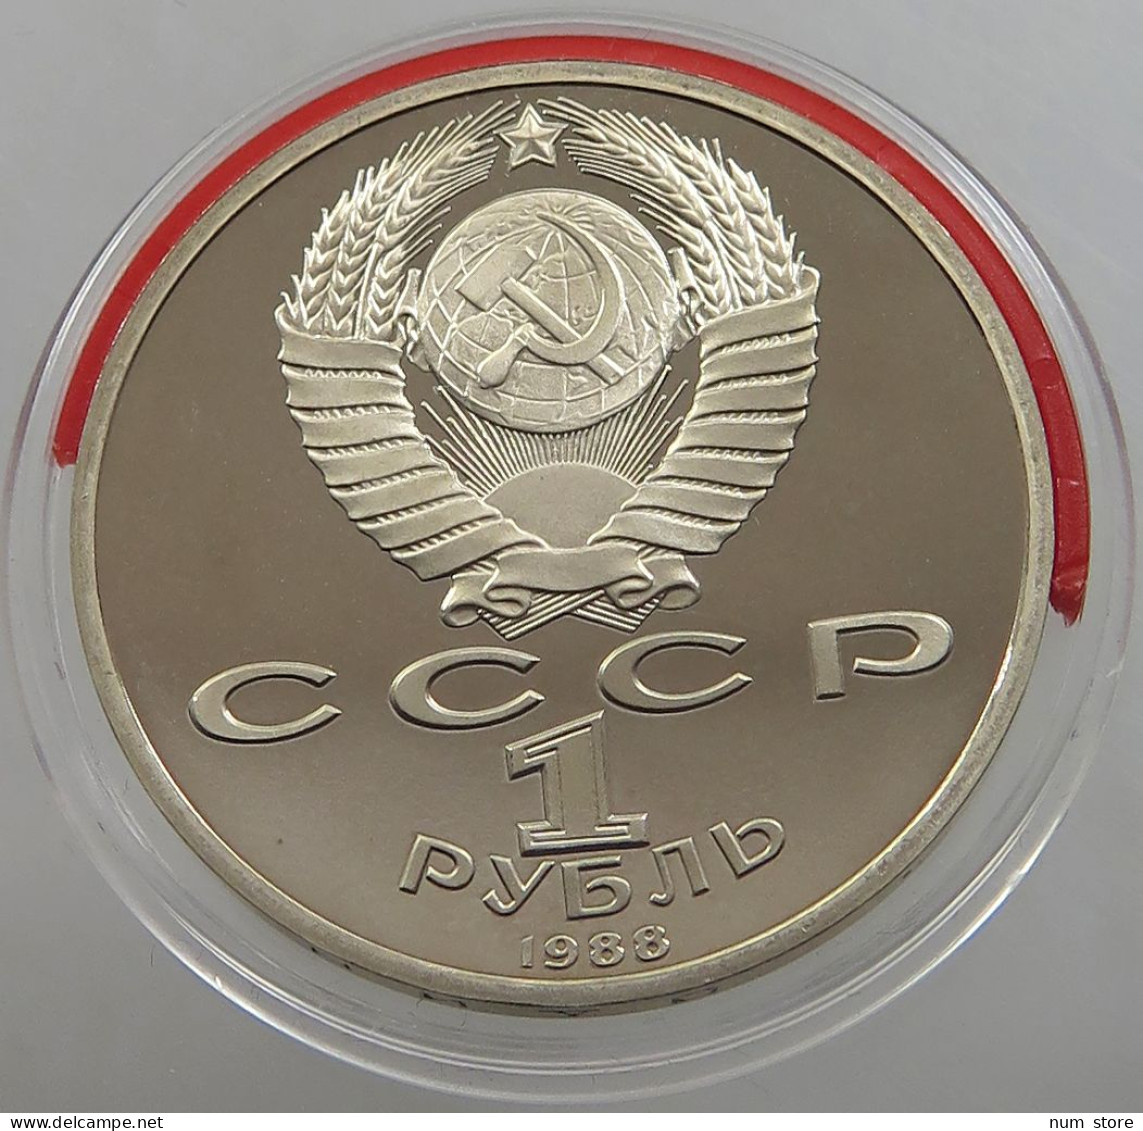 RUSSIA USSR 1 ROUBLE 1988 GORKI PROOF #sm14 0529 - Rusland